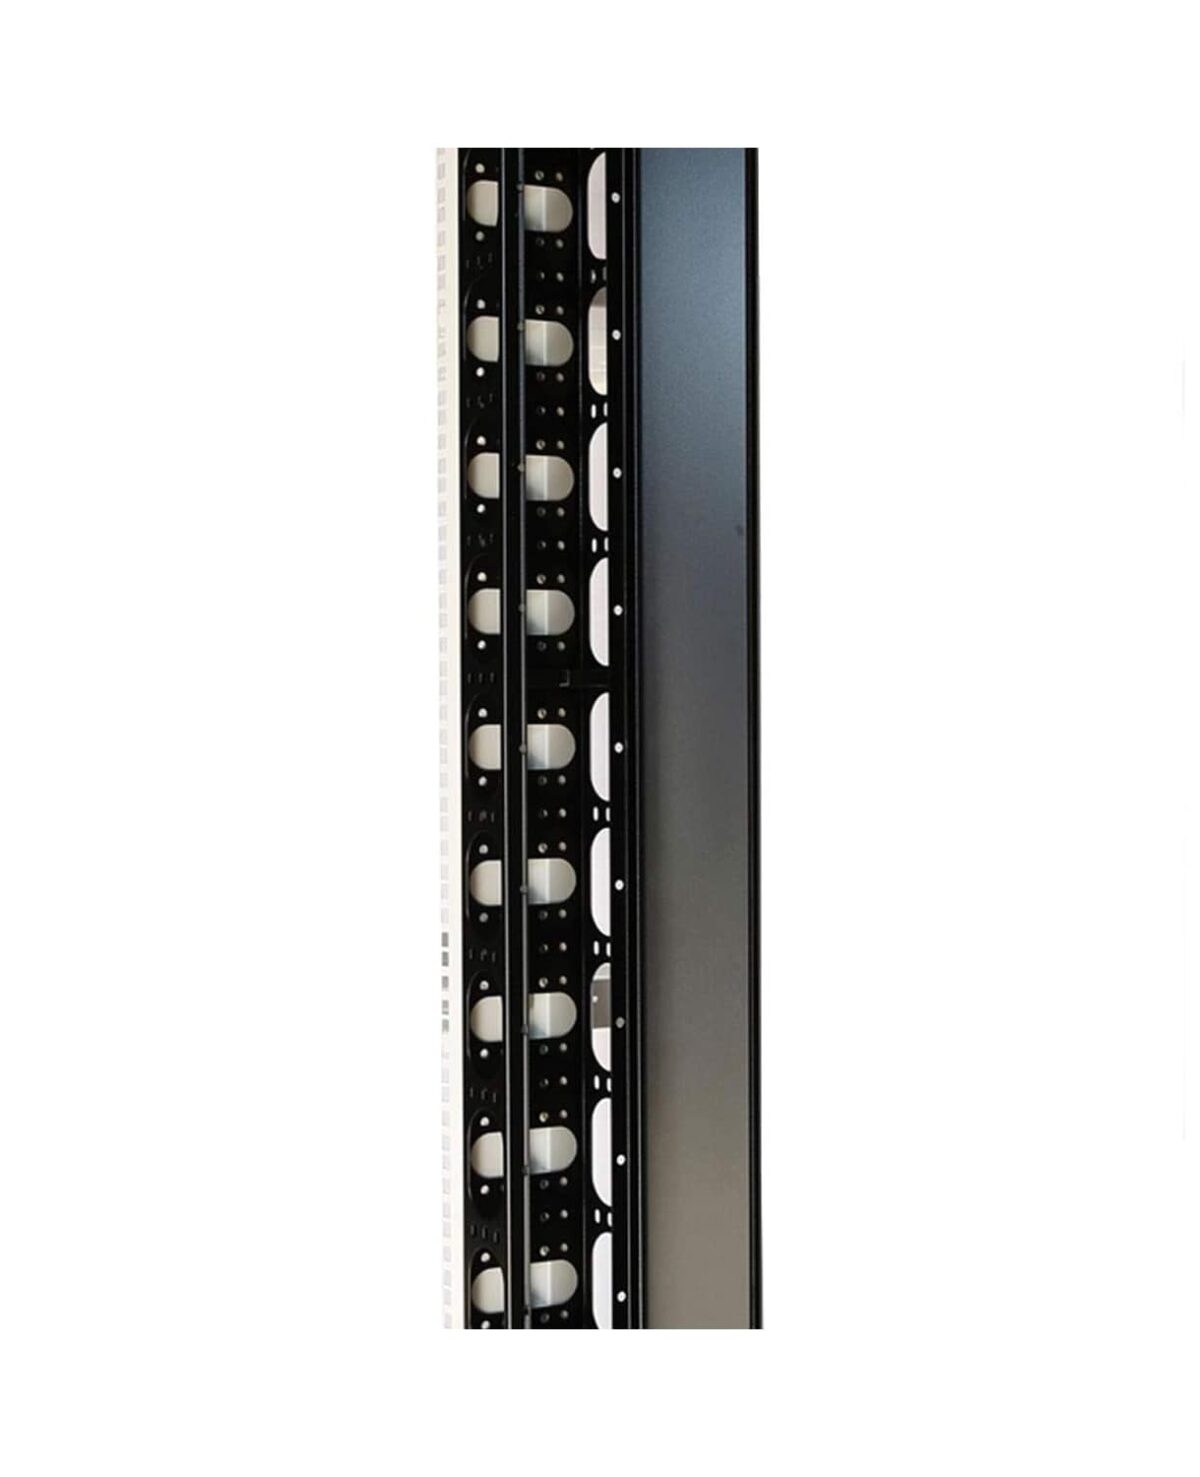 LANTEK-LTK.OV42-Organizador-Vertical-metalico-1pcs-42u-incluye-tornillos-ORGANIZADORES-min.jpg